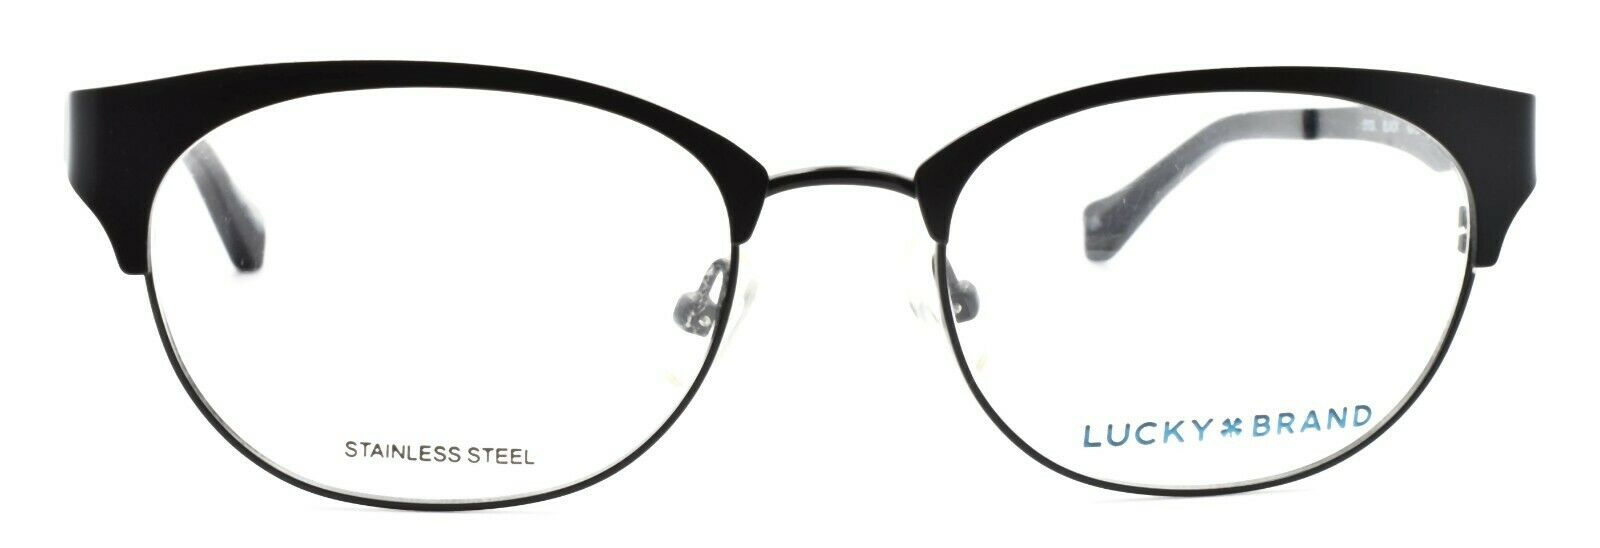 2-LUCKY BRAND D103 Women's Eyeglasses Frames 50-18-135 Black + CASE-751286281705-IKSpecs